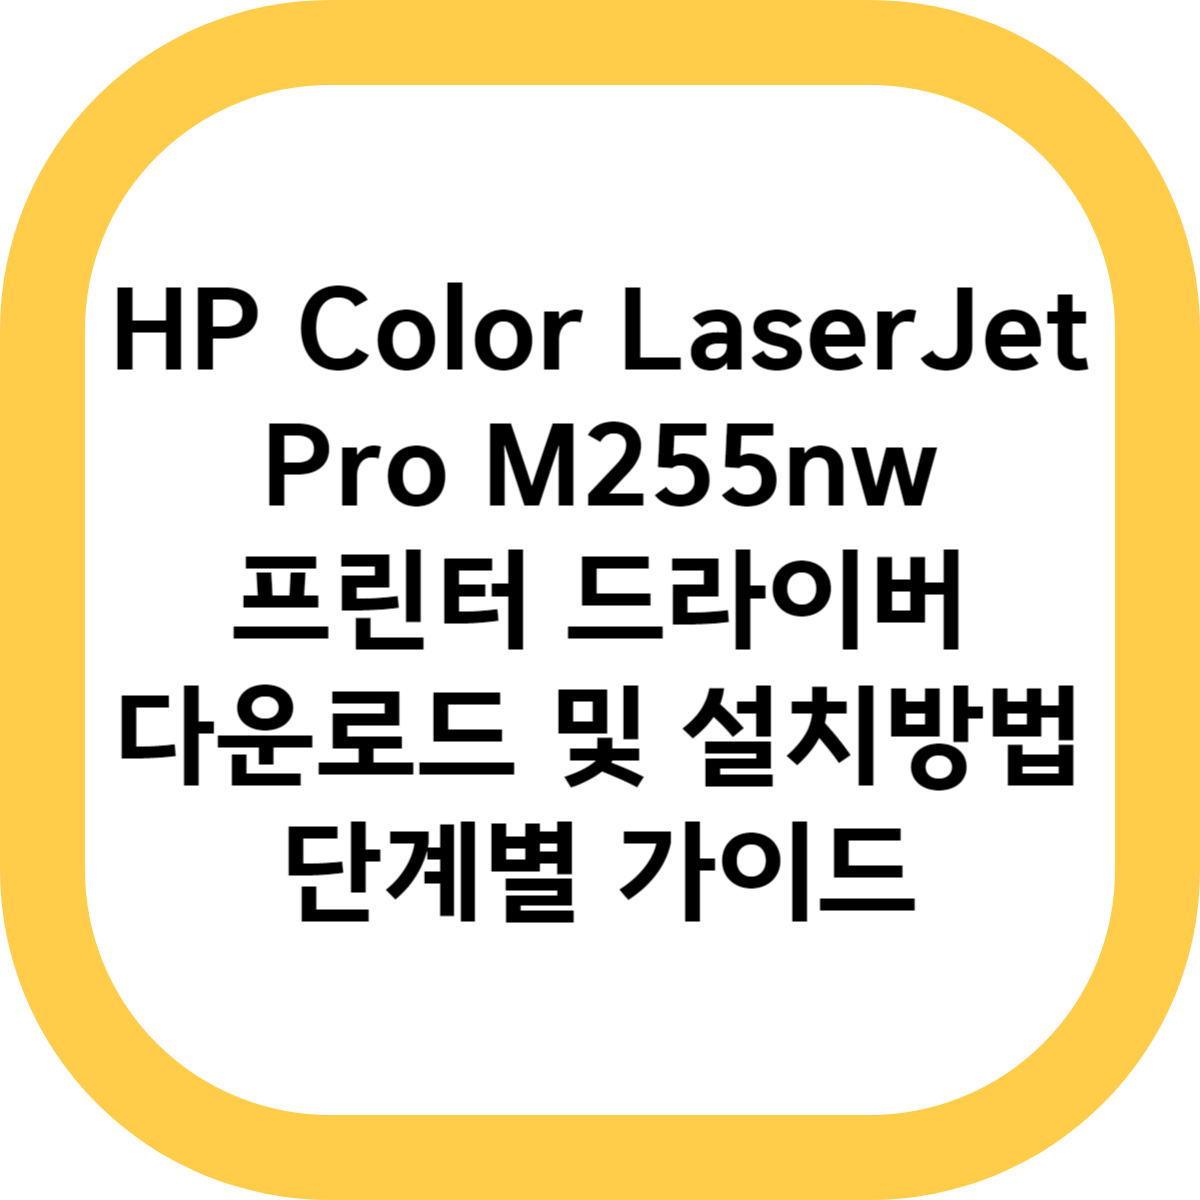 HP Color LaserJet Pro M255nw 프린터 드라이버 다운로드 및 설치방법 단계별 가이드